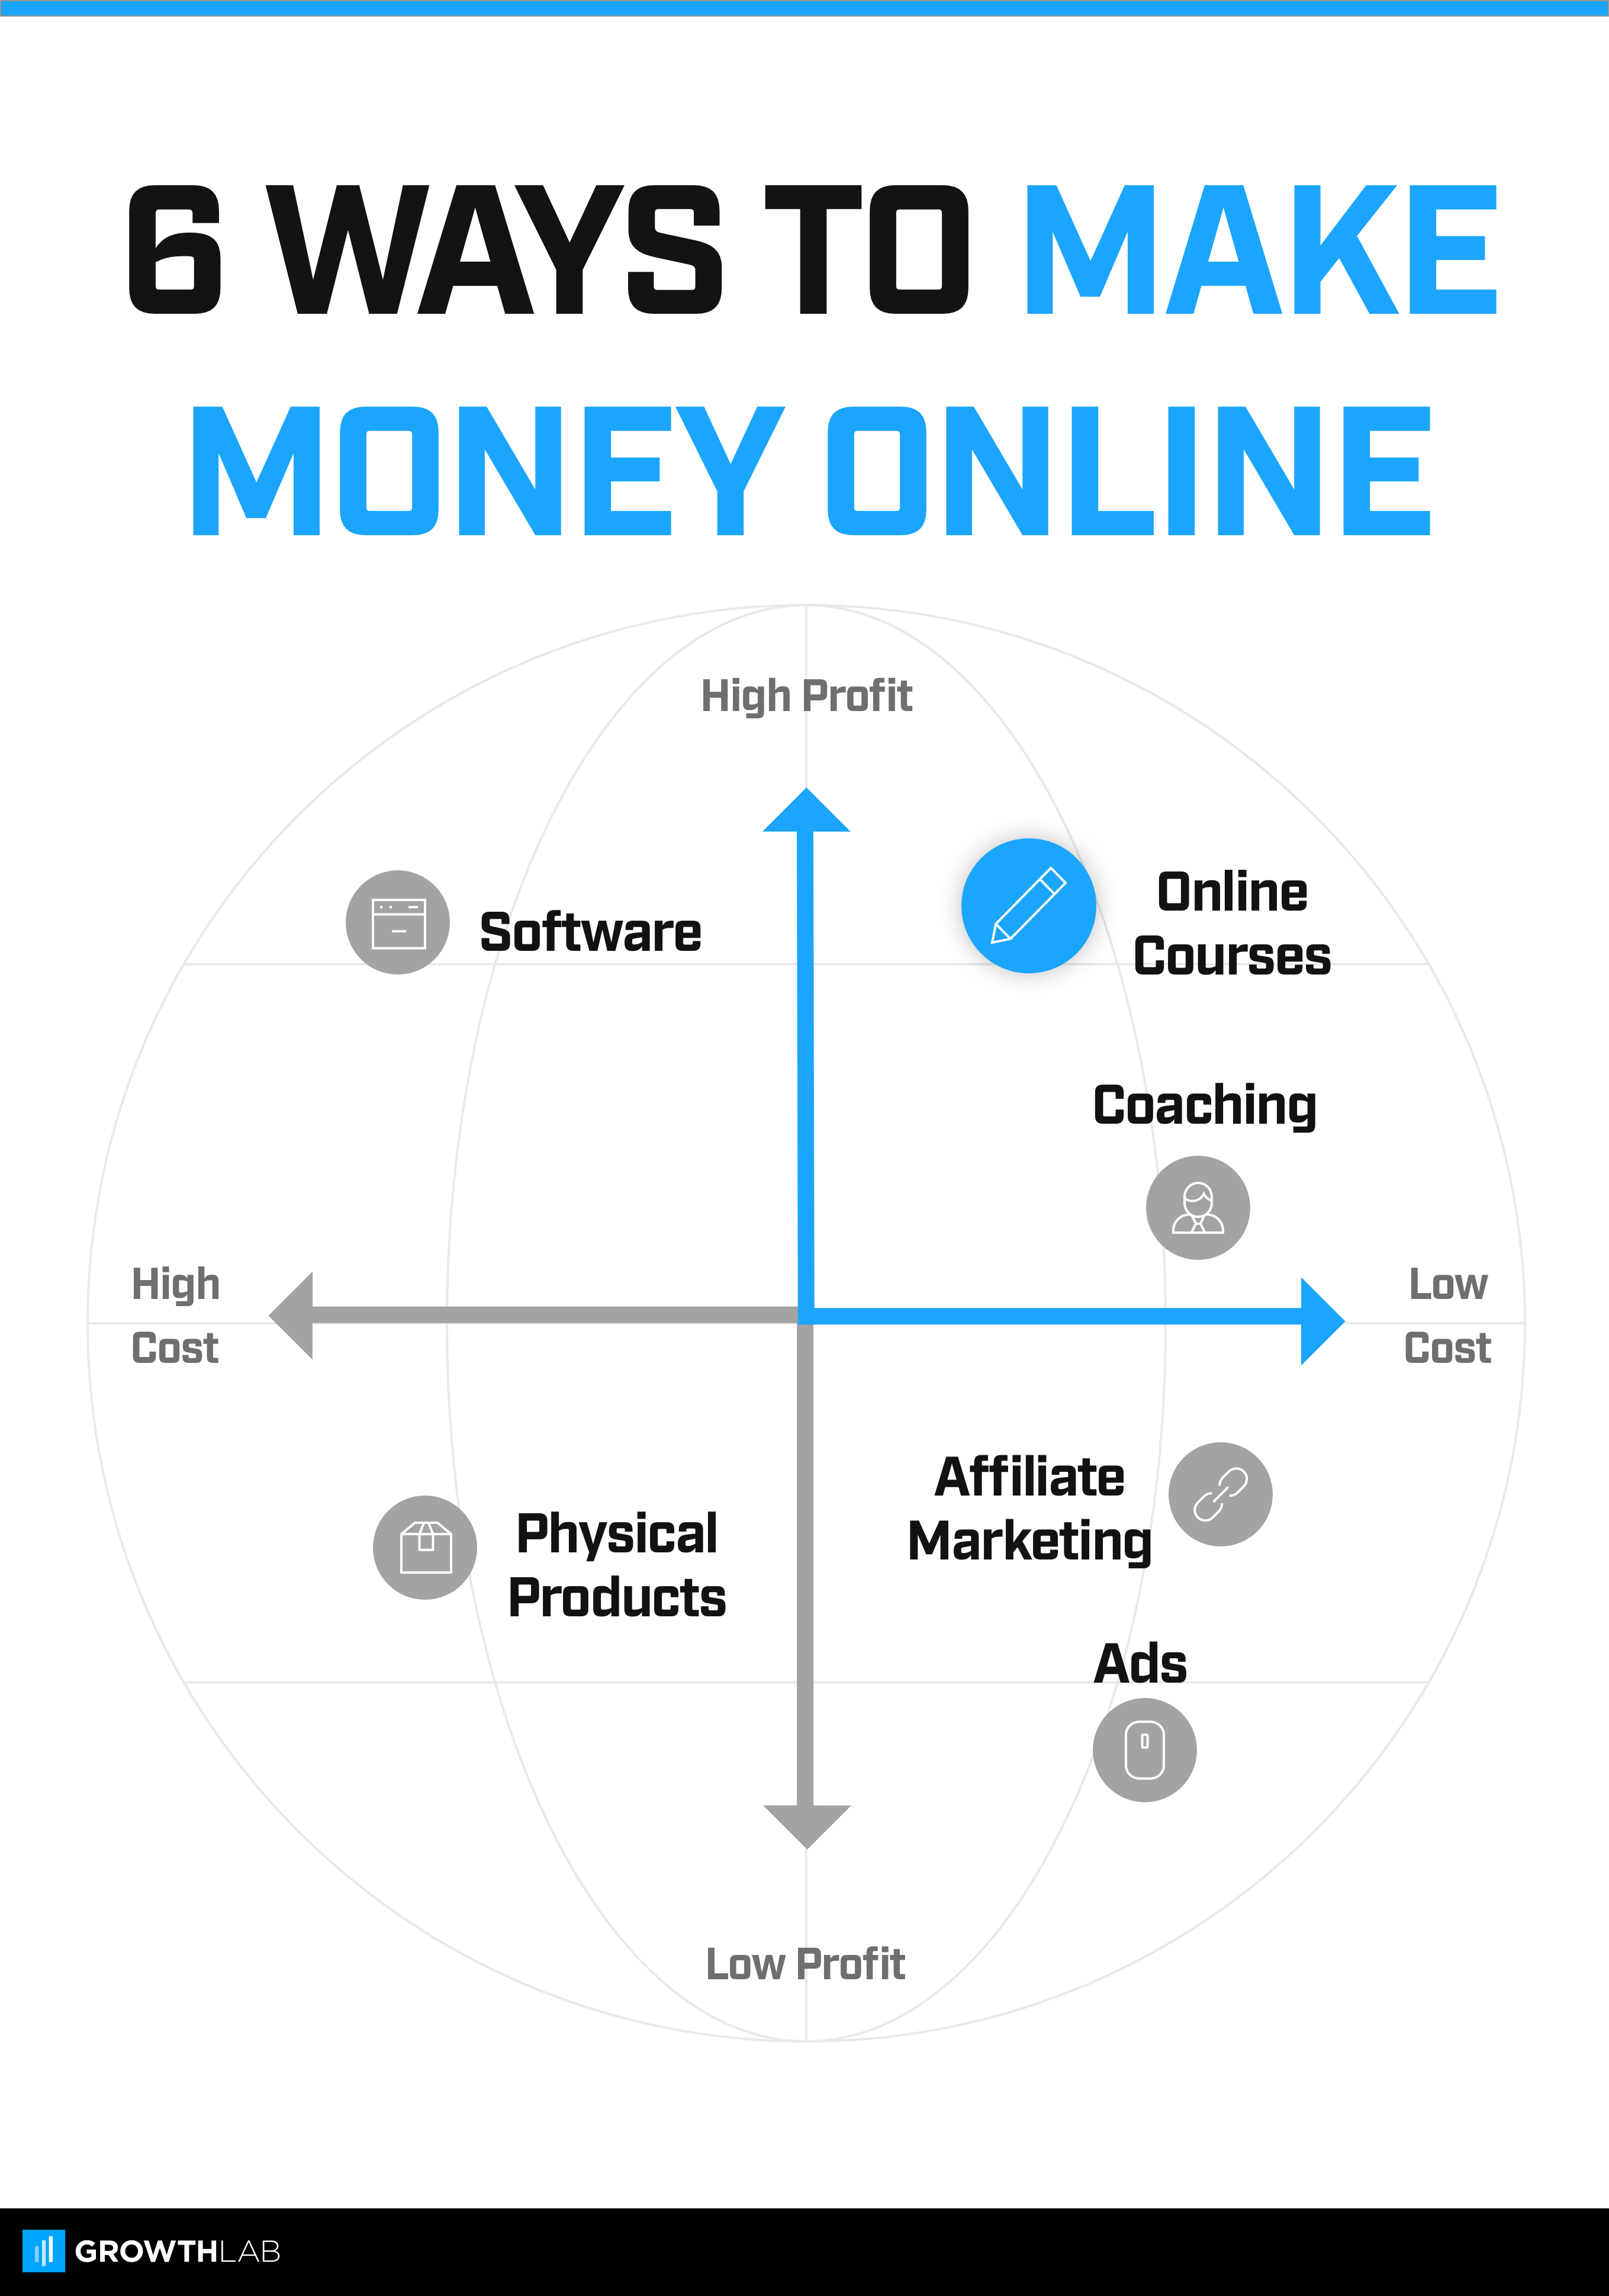 GrowthLab.com: 6 Ways to Make Money Online